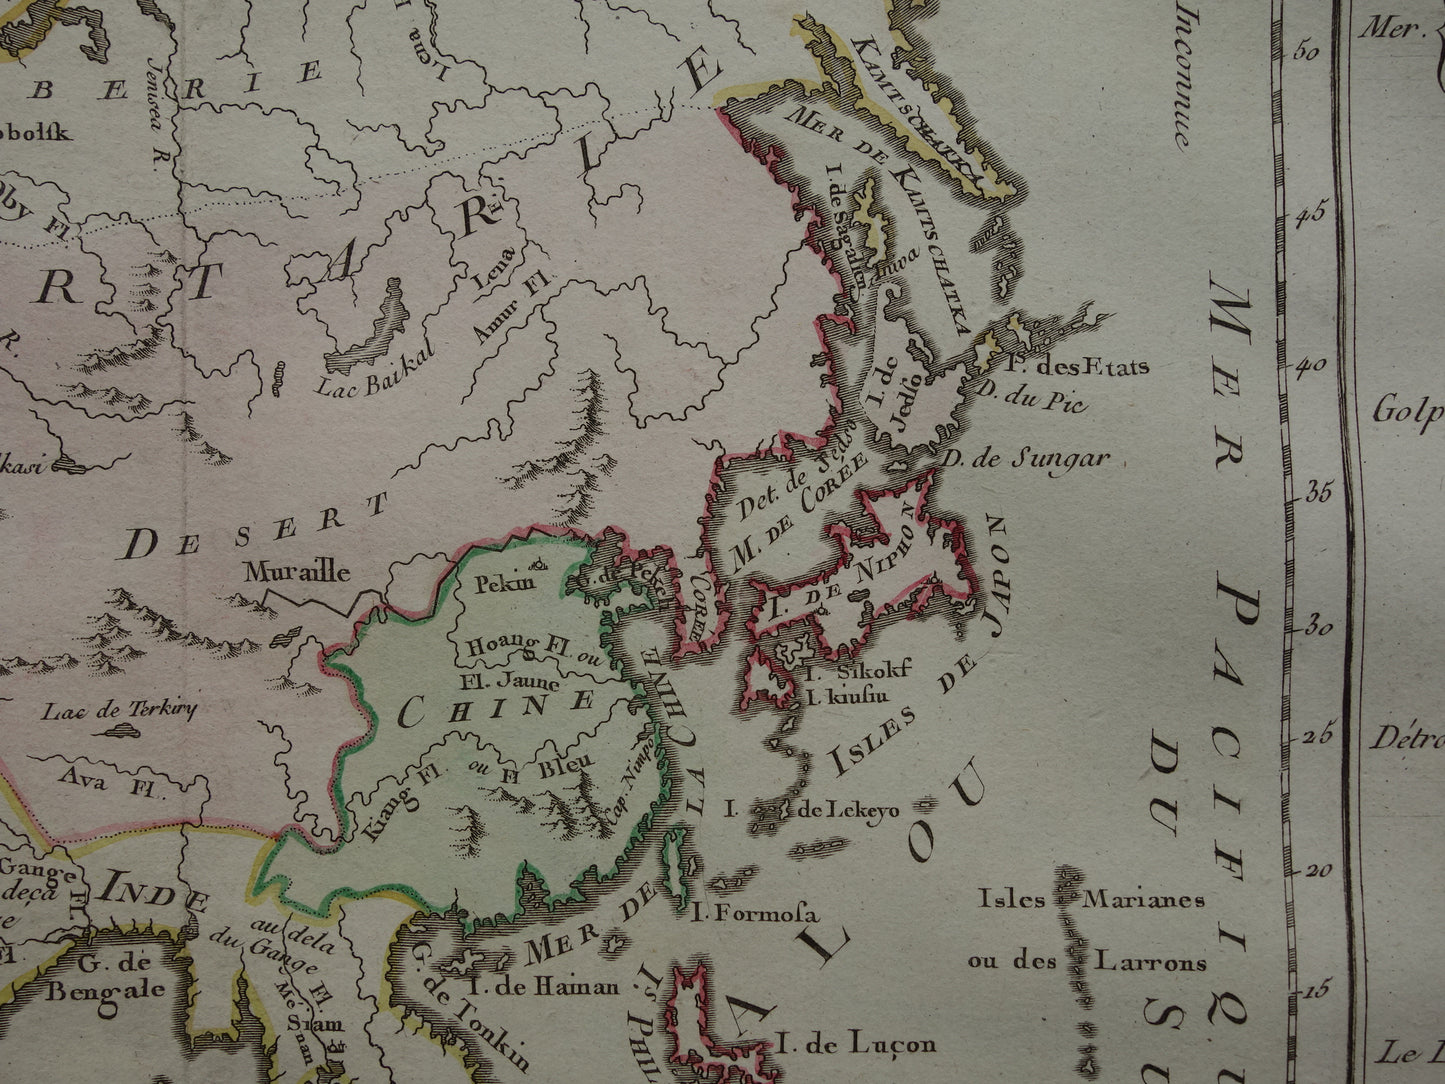 Oude Landkaart Azië uit 1761 Originele Antieke Kaart Continent Azië Vintage Kaarten